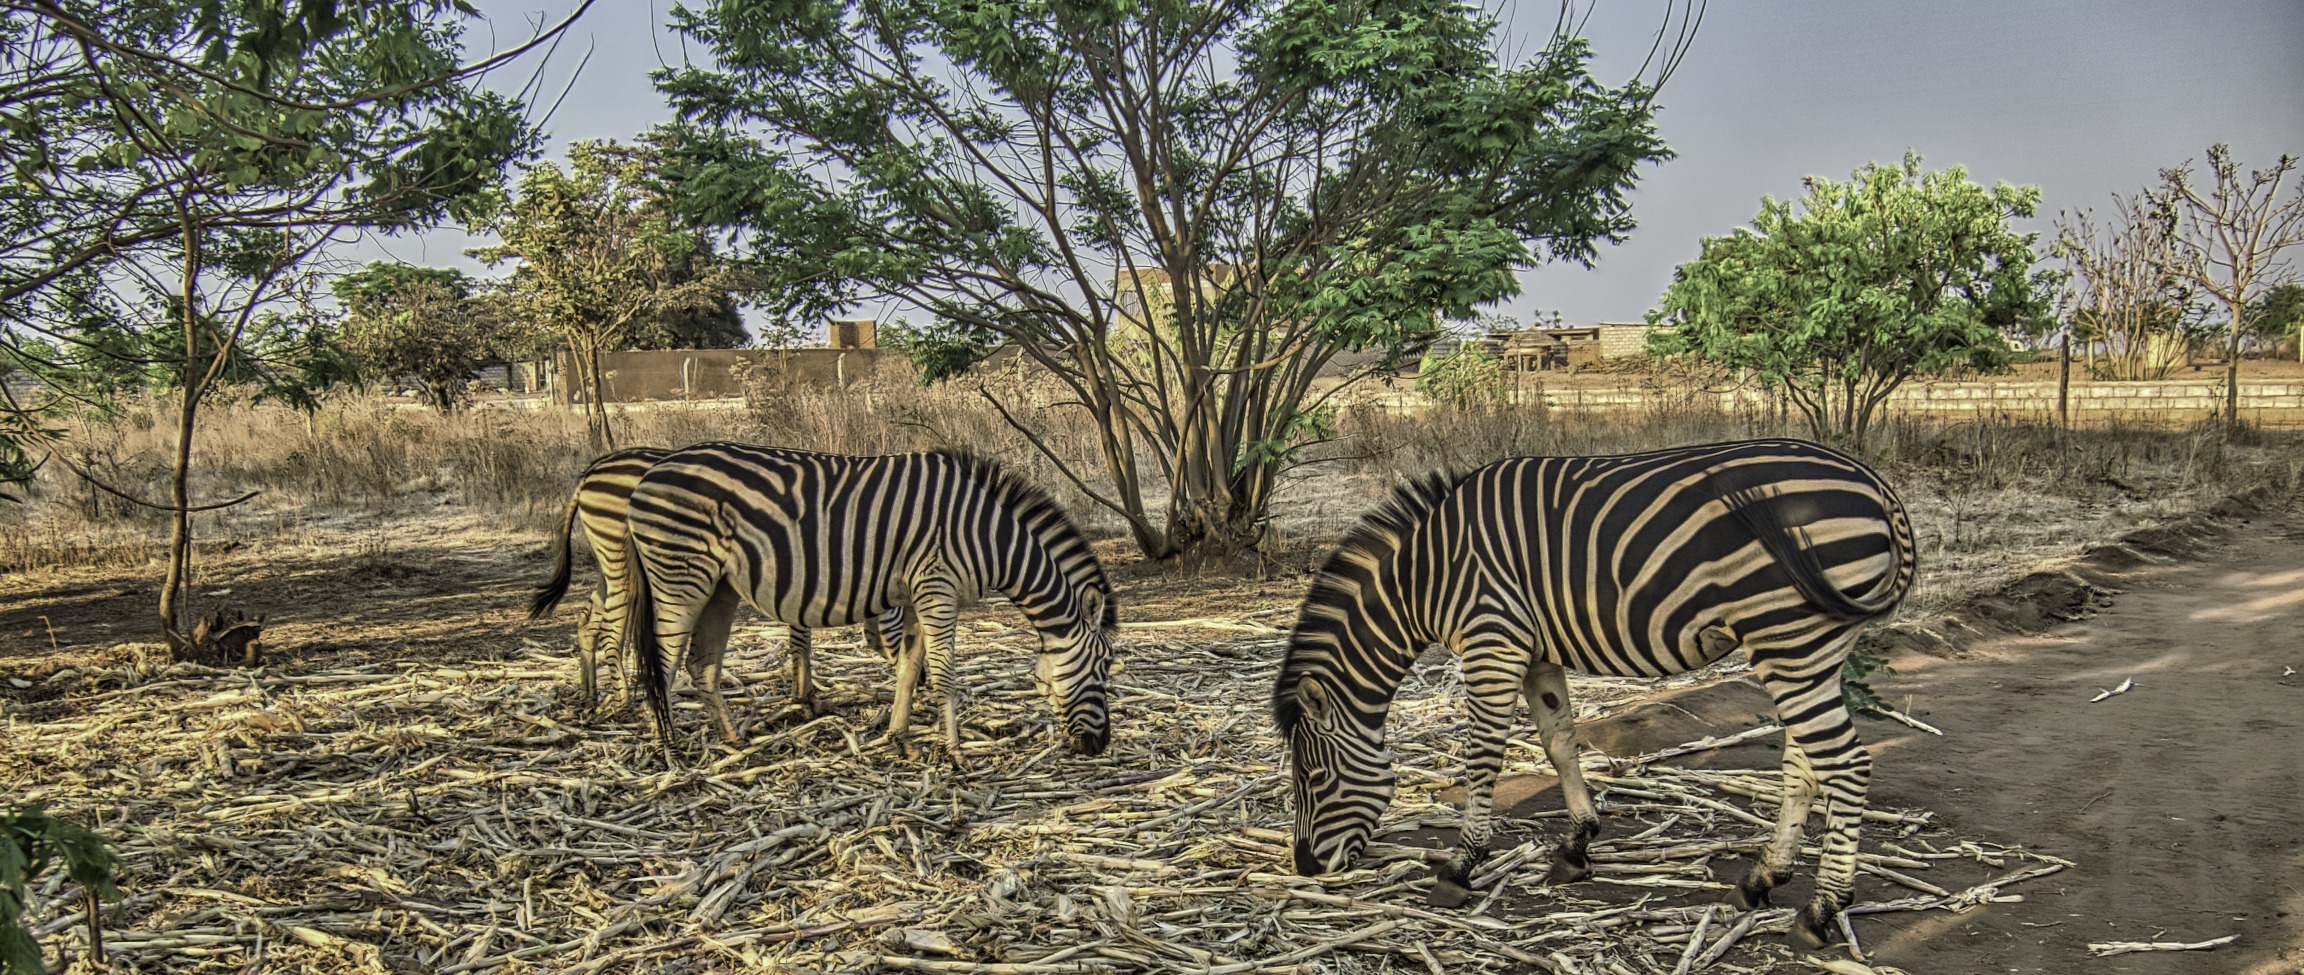 Three zebras grazing on cork stalks in Lilongwe, Malawi